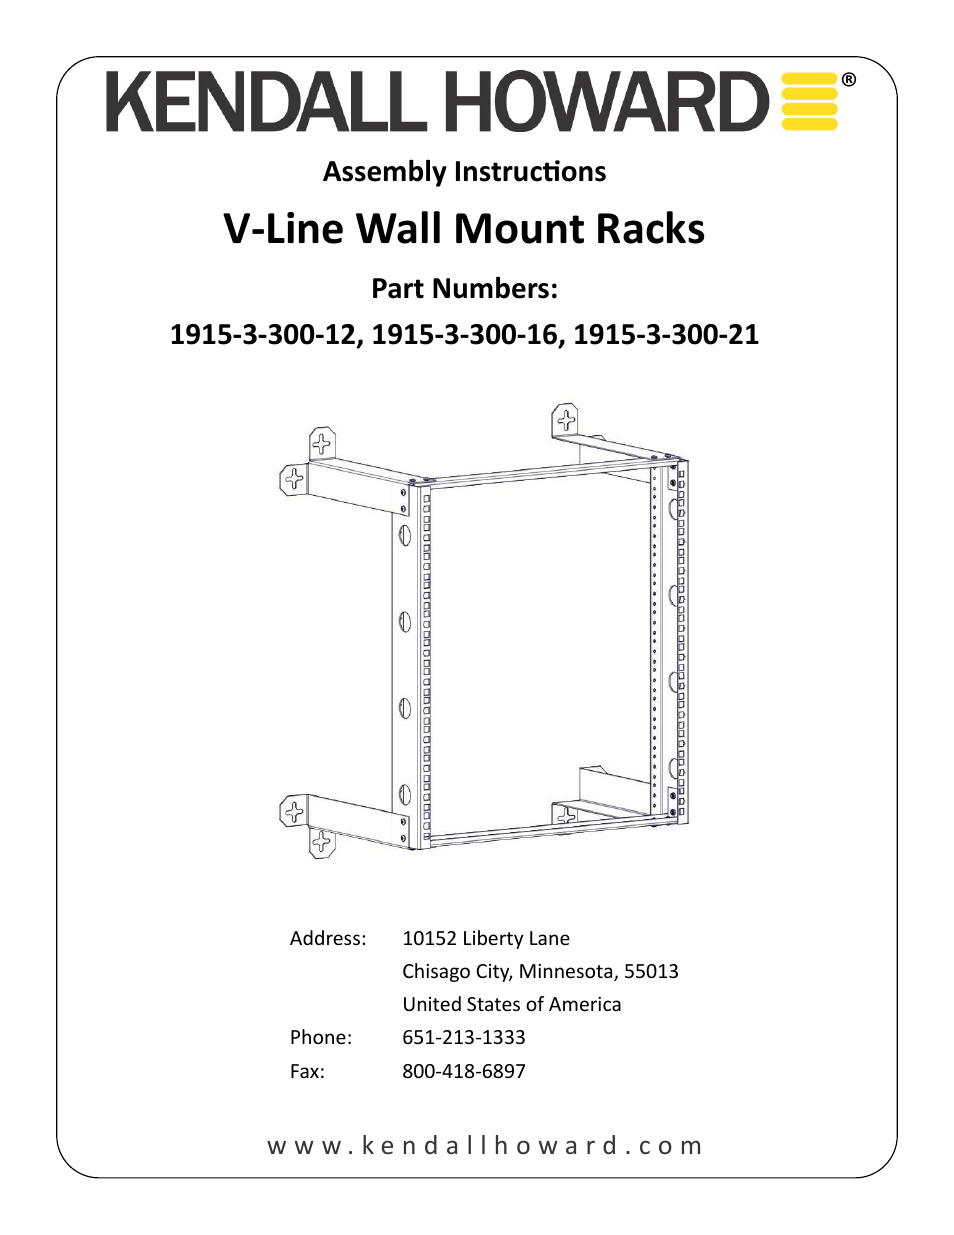 1915-3-300-21 21U V-Line Wall Mount Rack